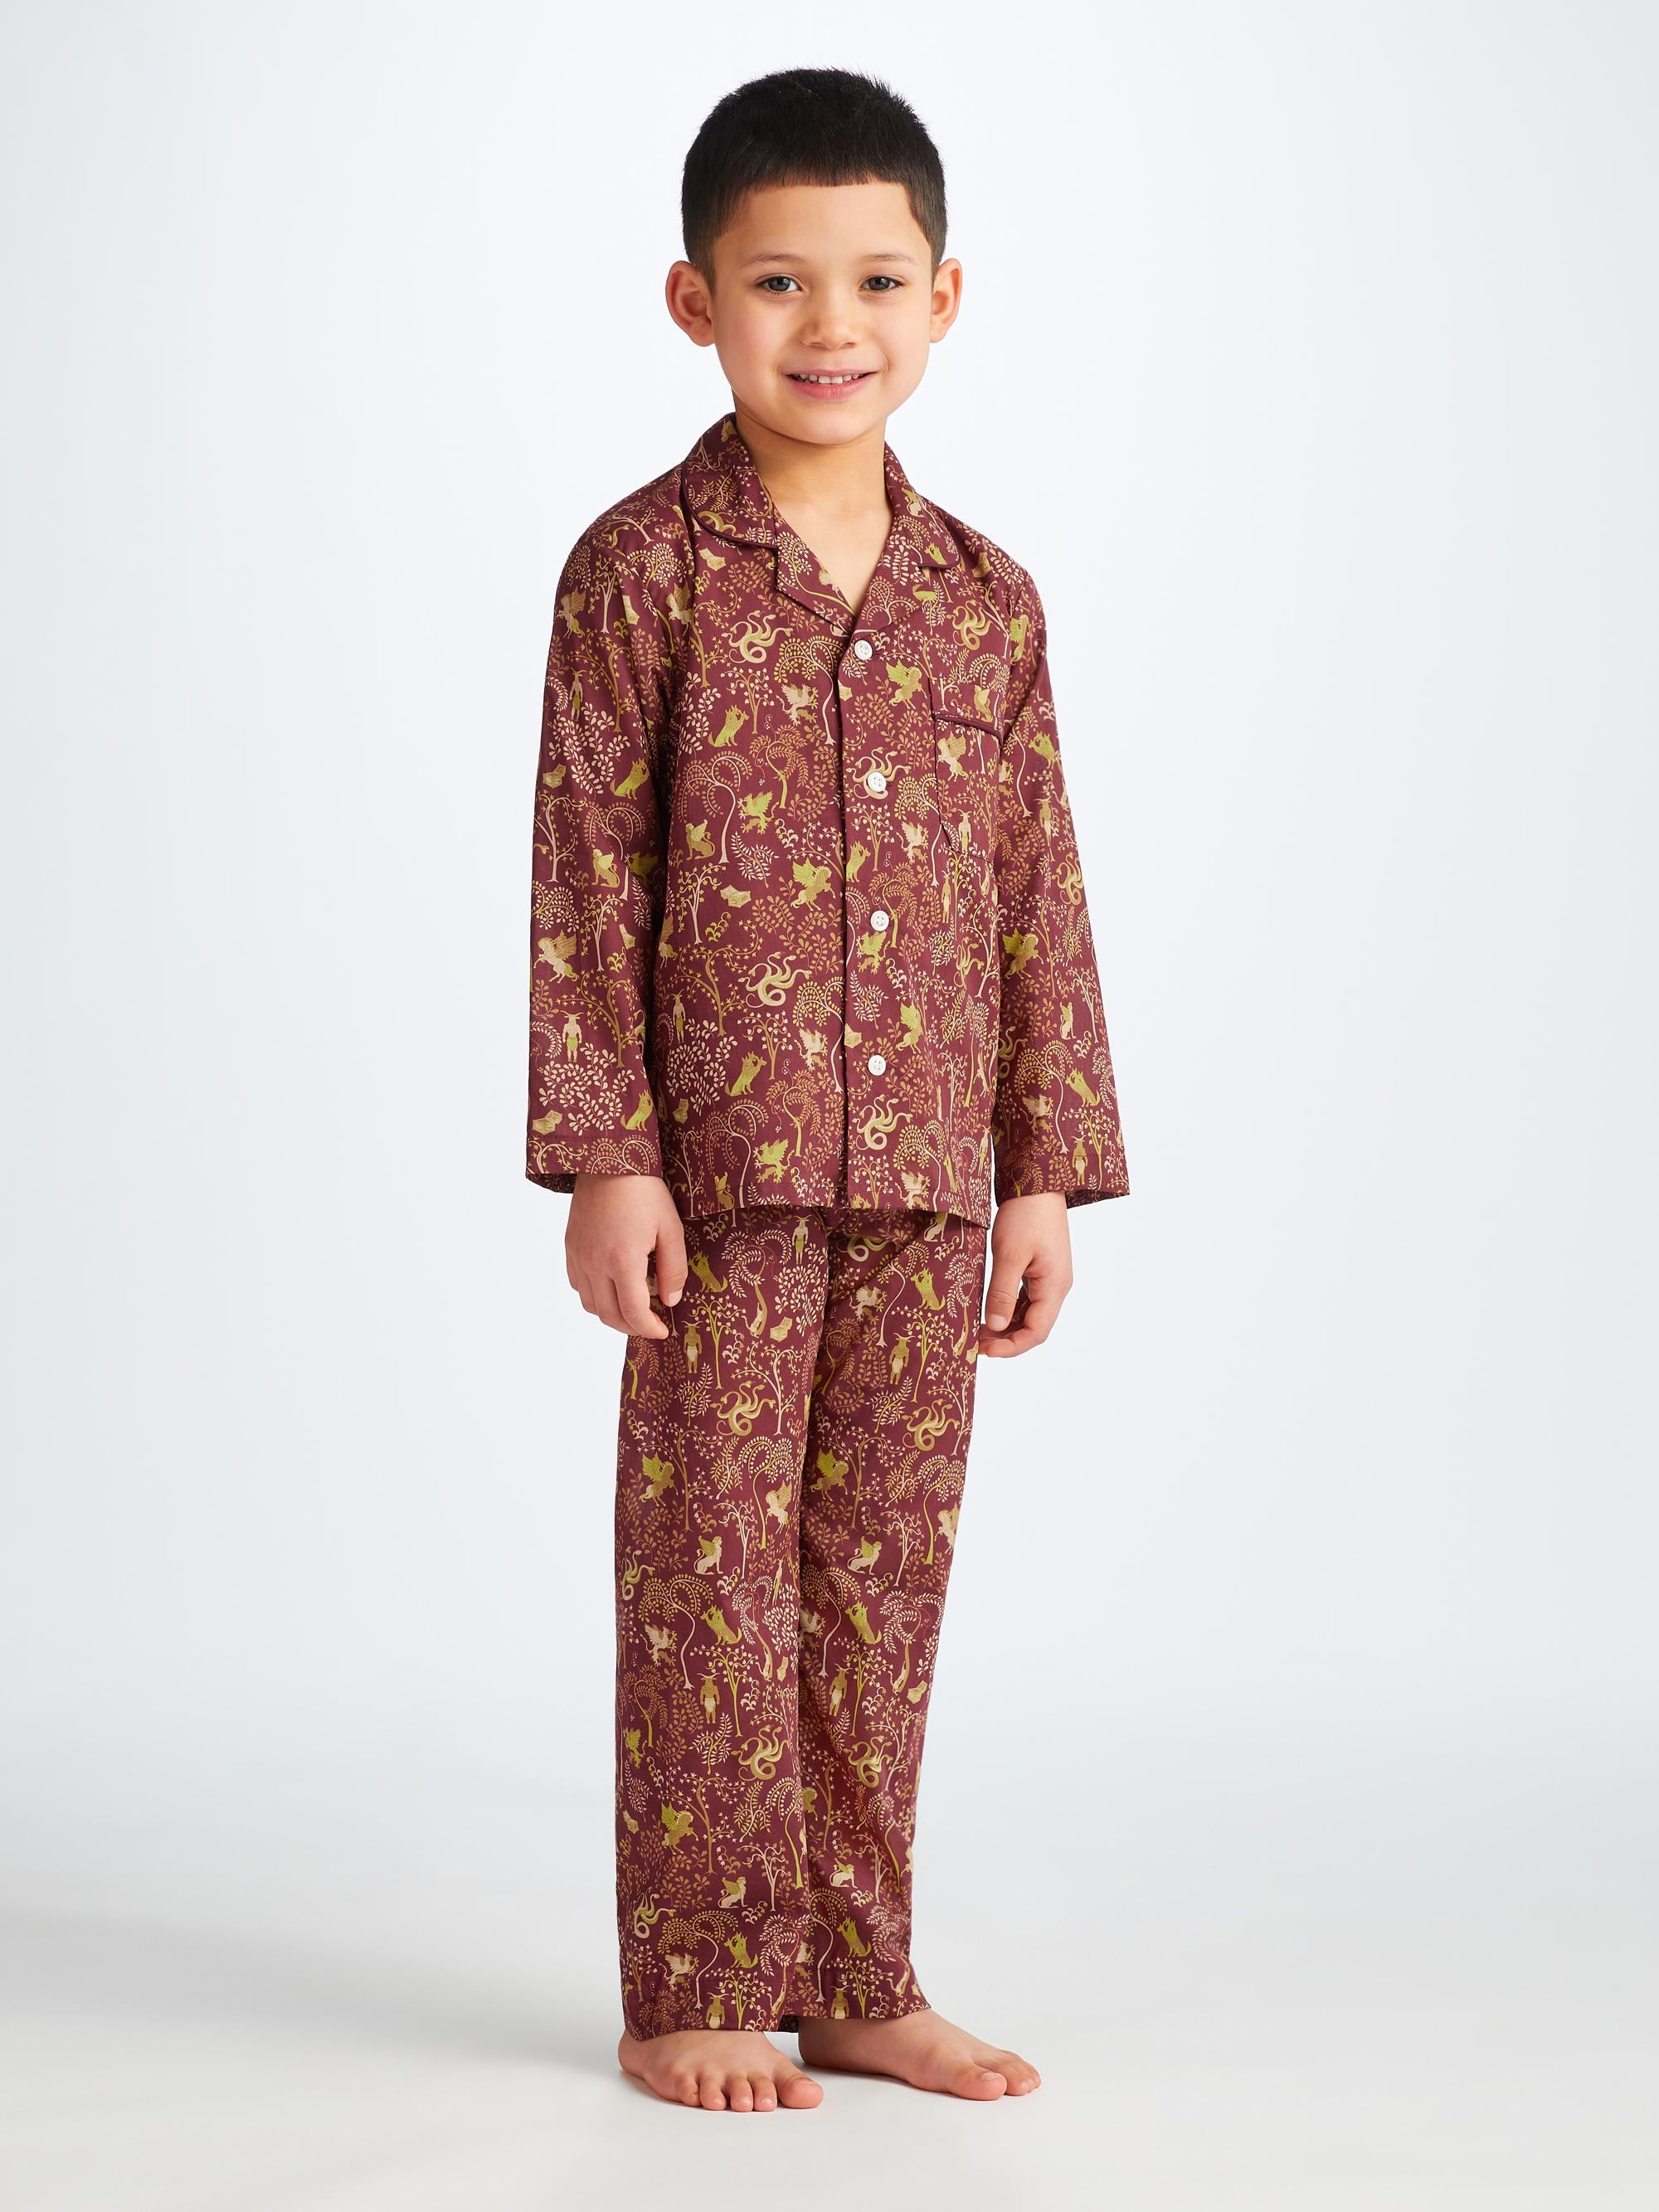 Kids' Pyjamas Ledbury 74 Cotton Batiste Burgundy